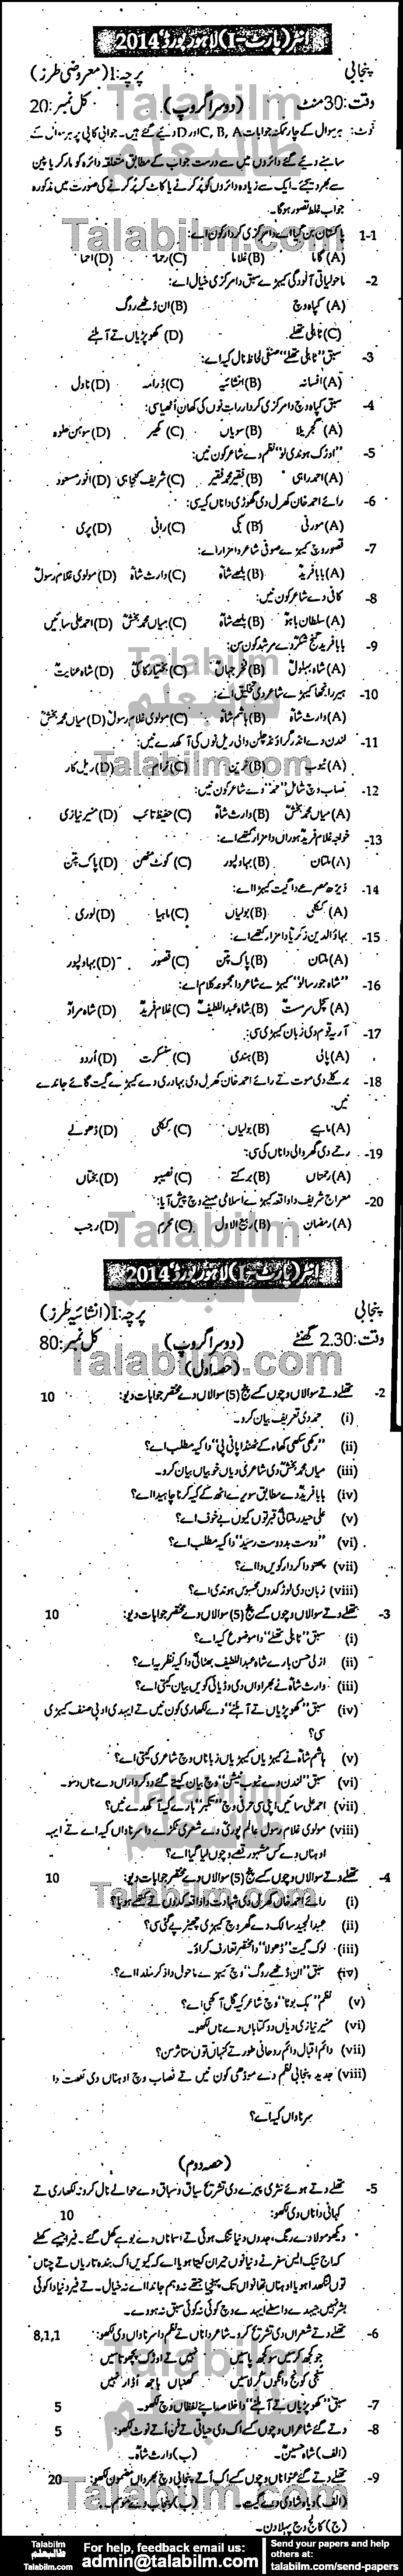 Punjabi 0 past paper for Group-II 2014